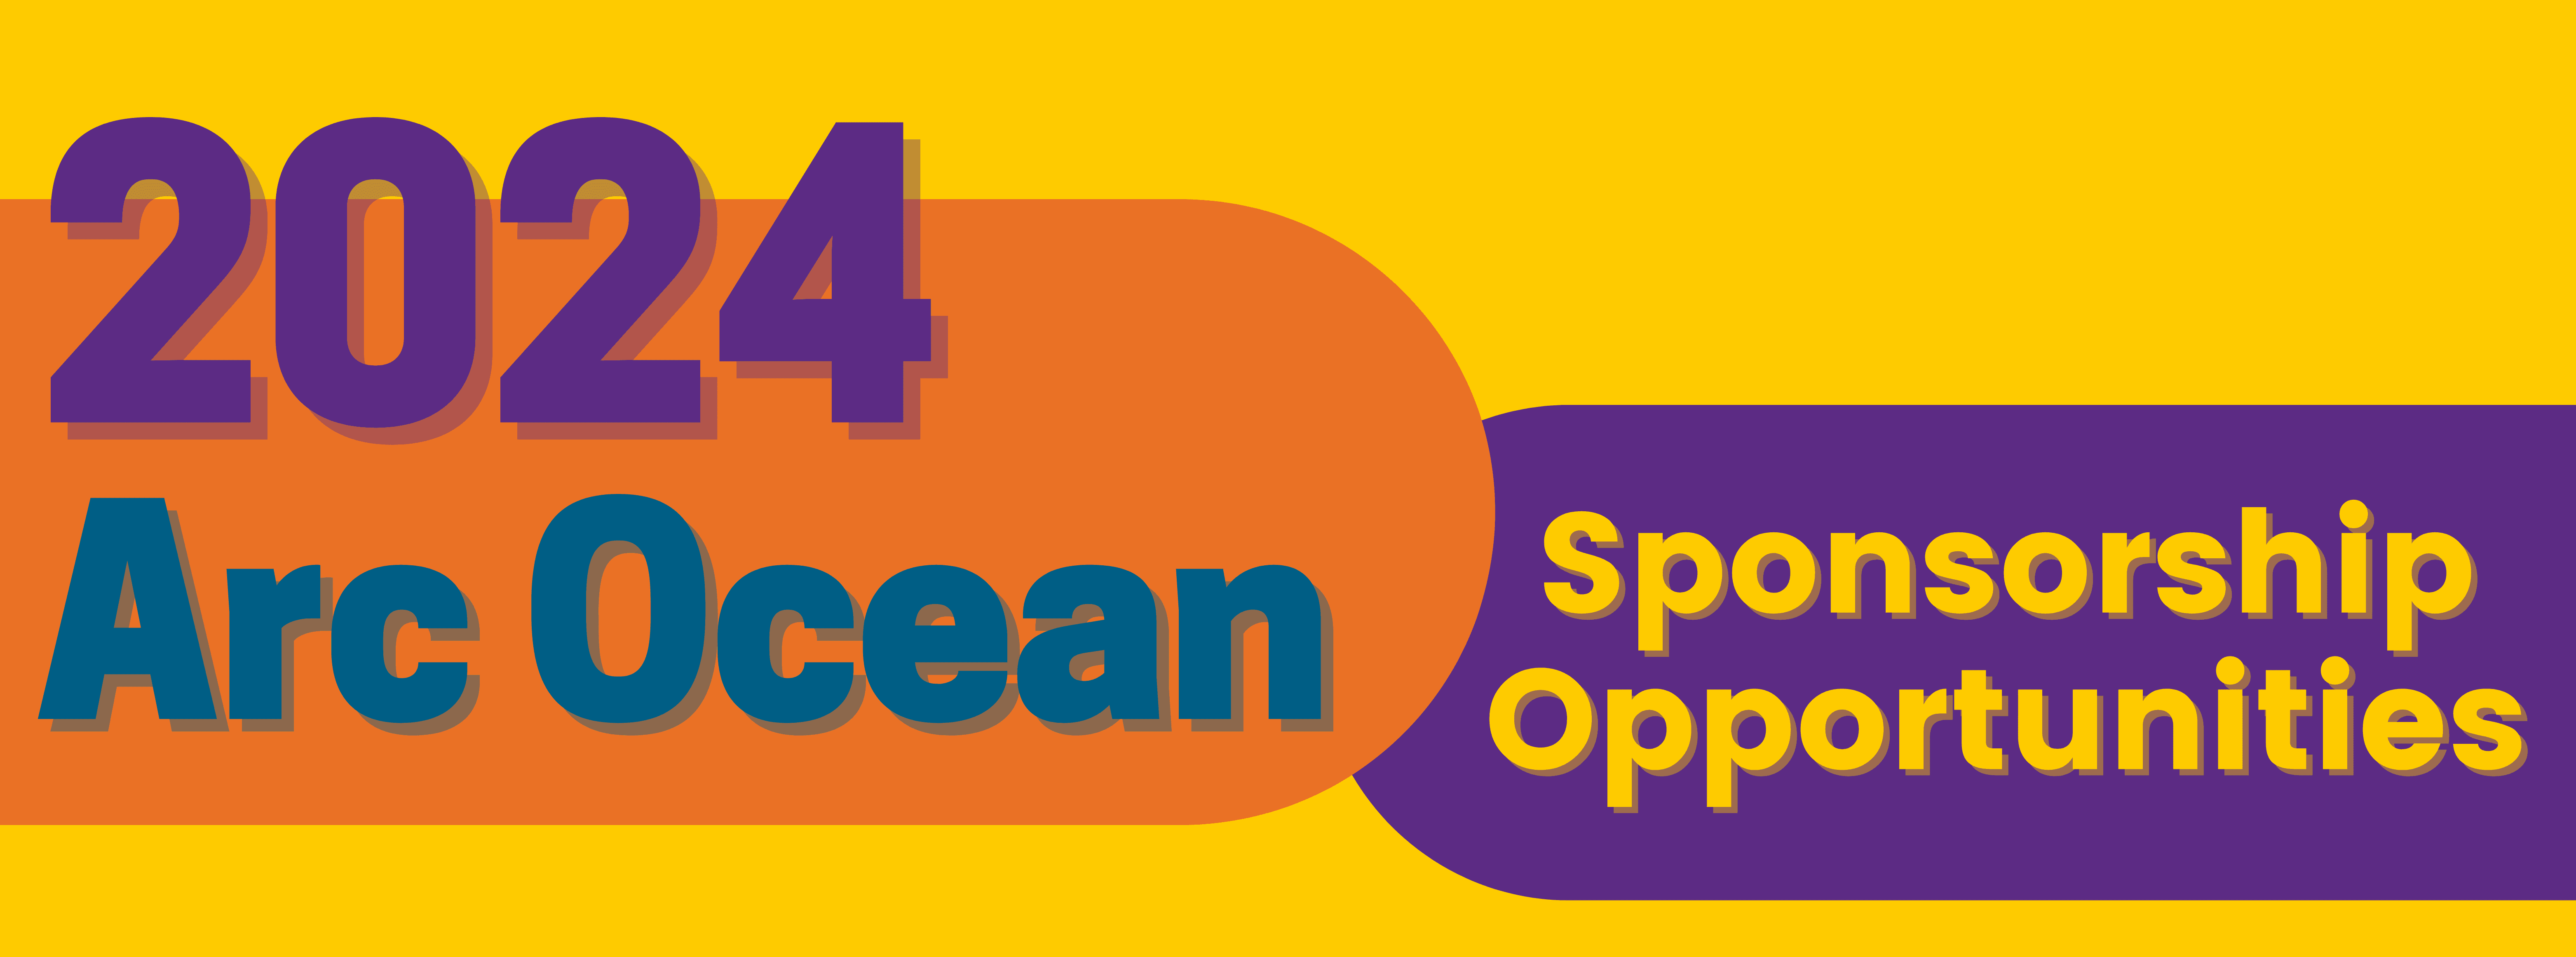 2023 Arc Ocean sponsorship opportunities 